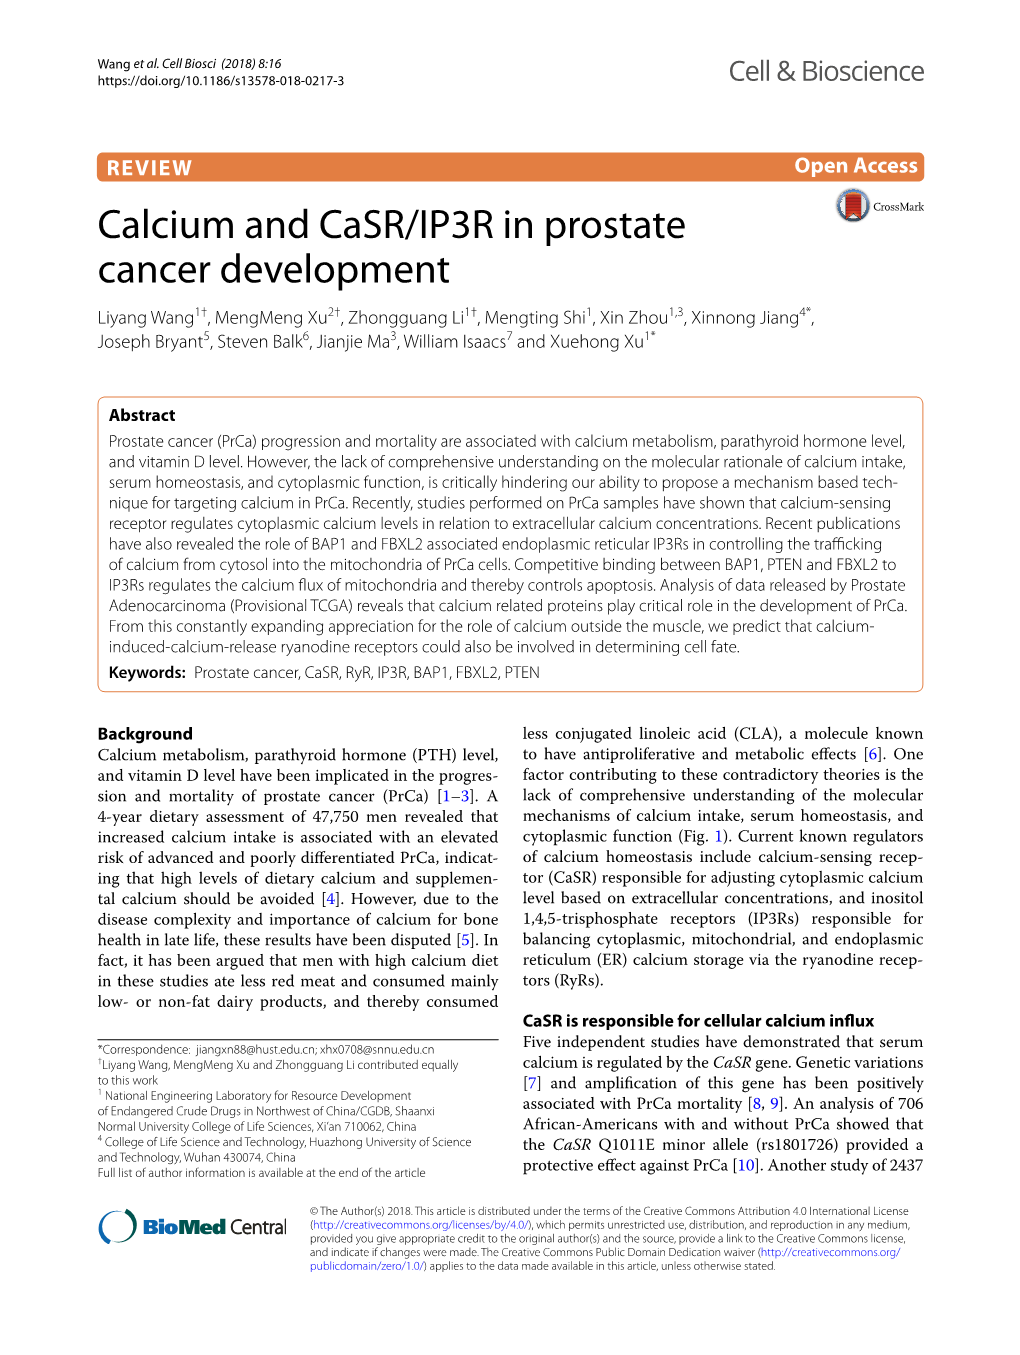 Calcium and Casr/IP3R in Prostate Cancer Development